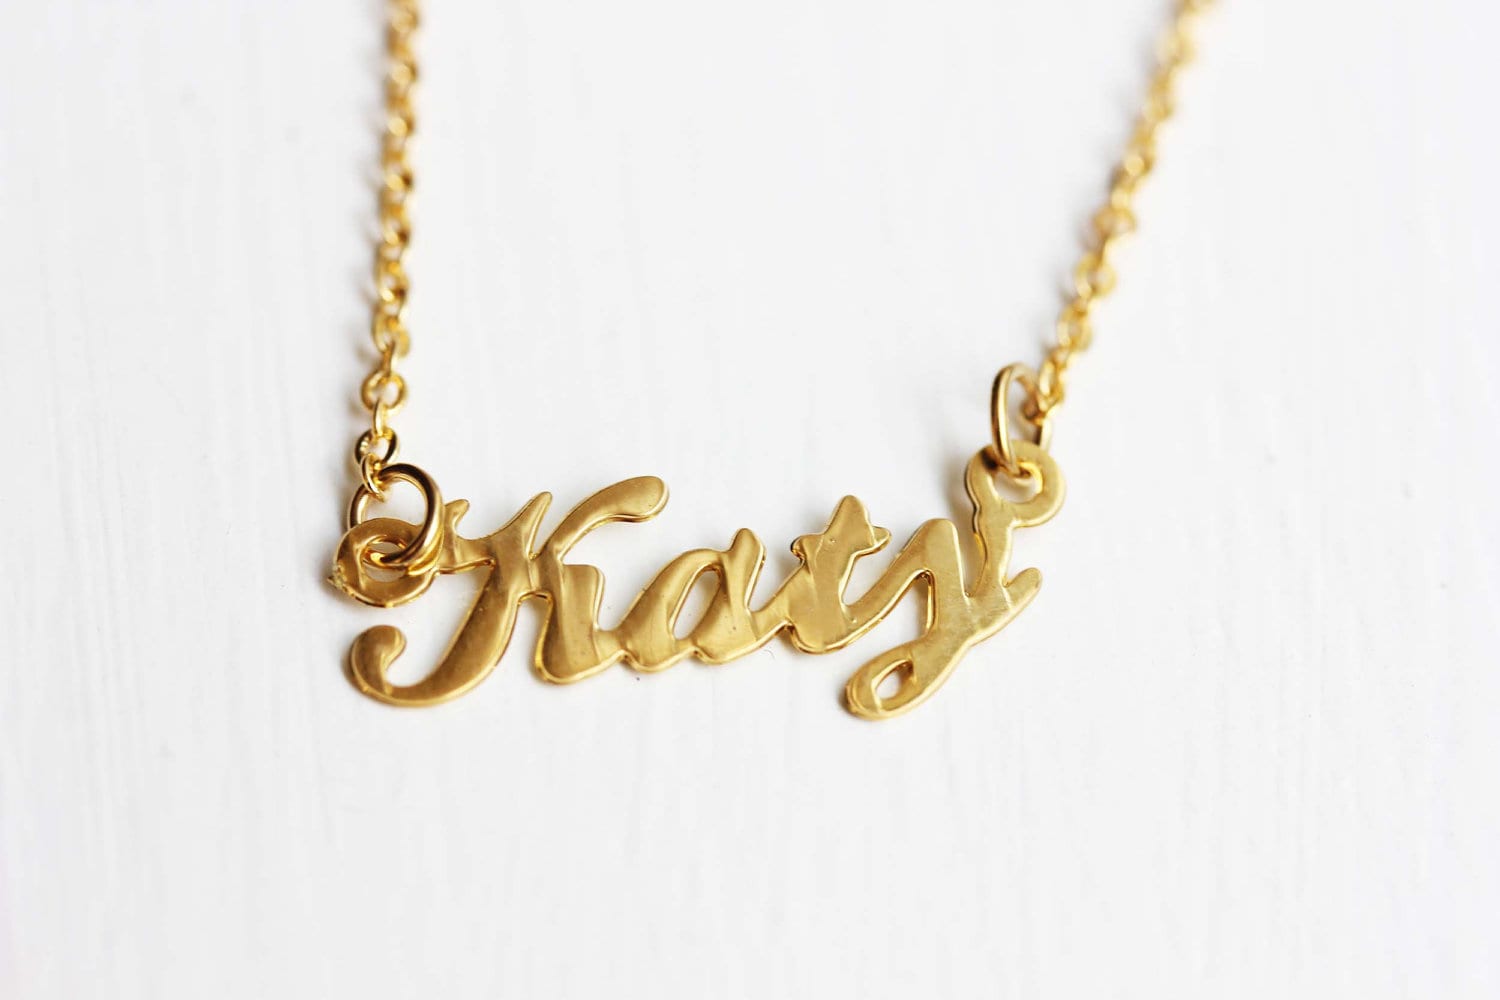 Katy Namenskette Gold, Namenskette, Vintage Goldkette, Halskette von diamentdesigns